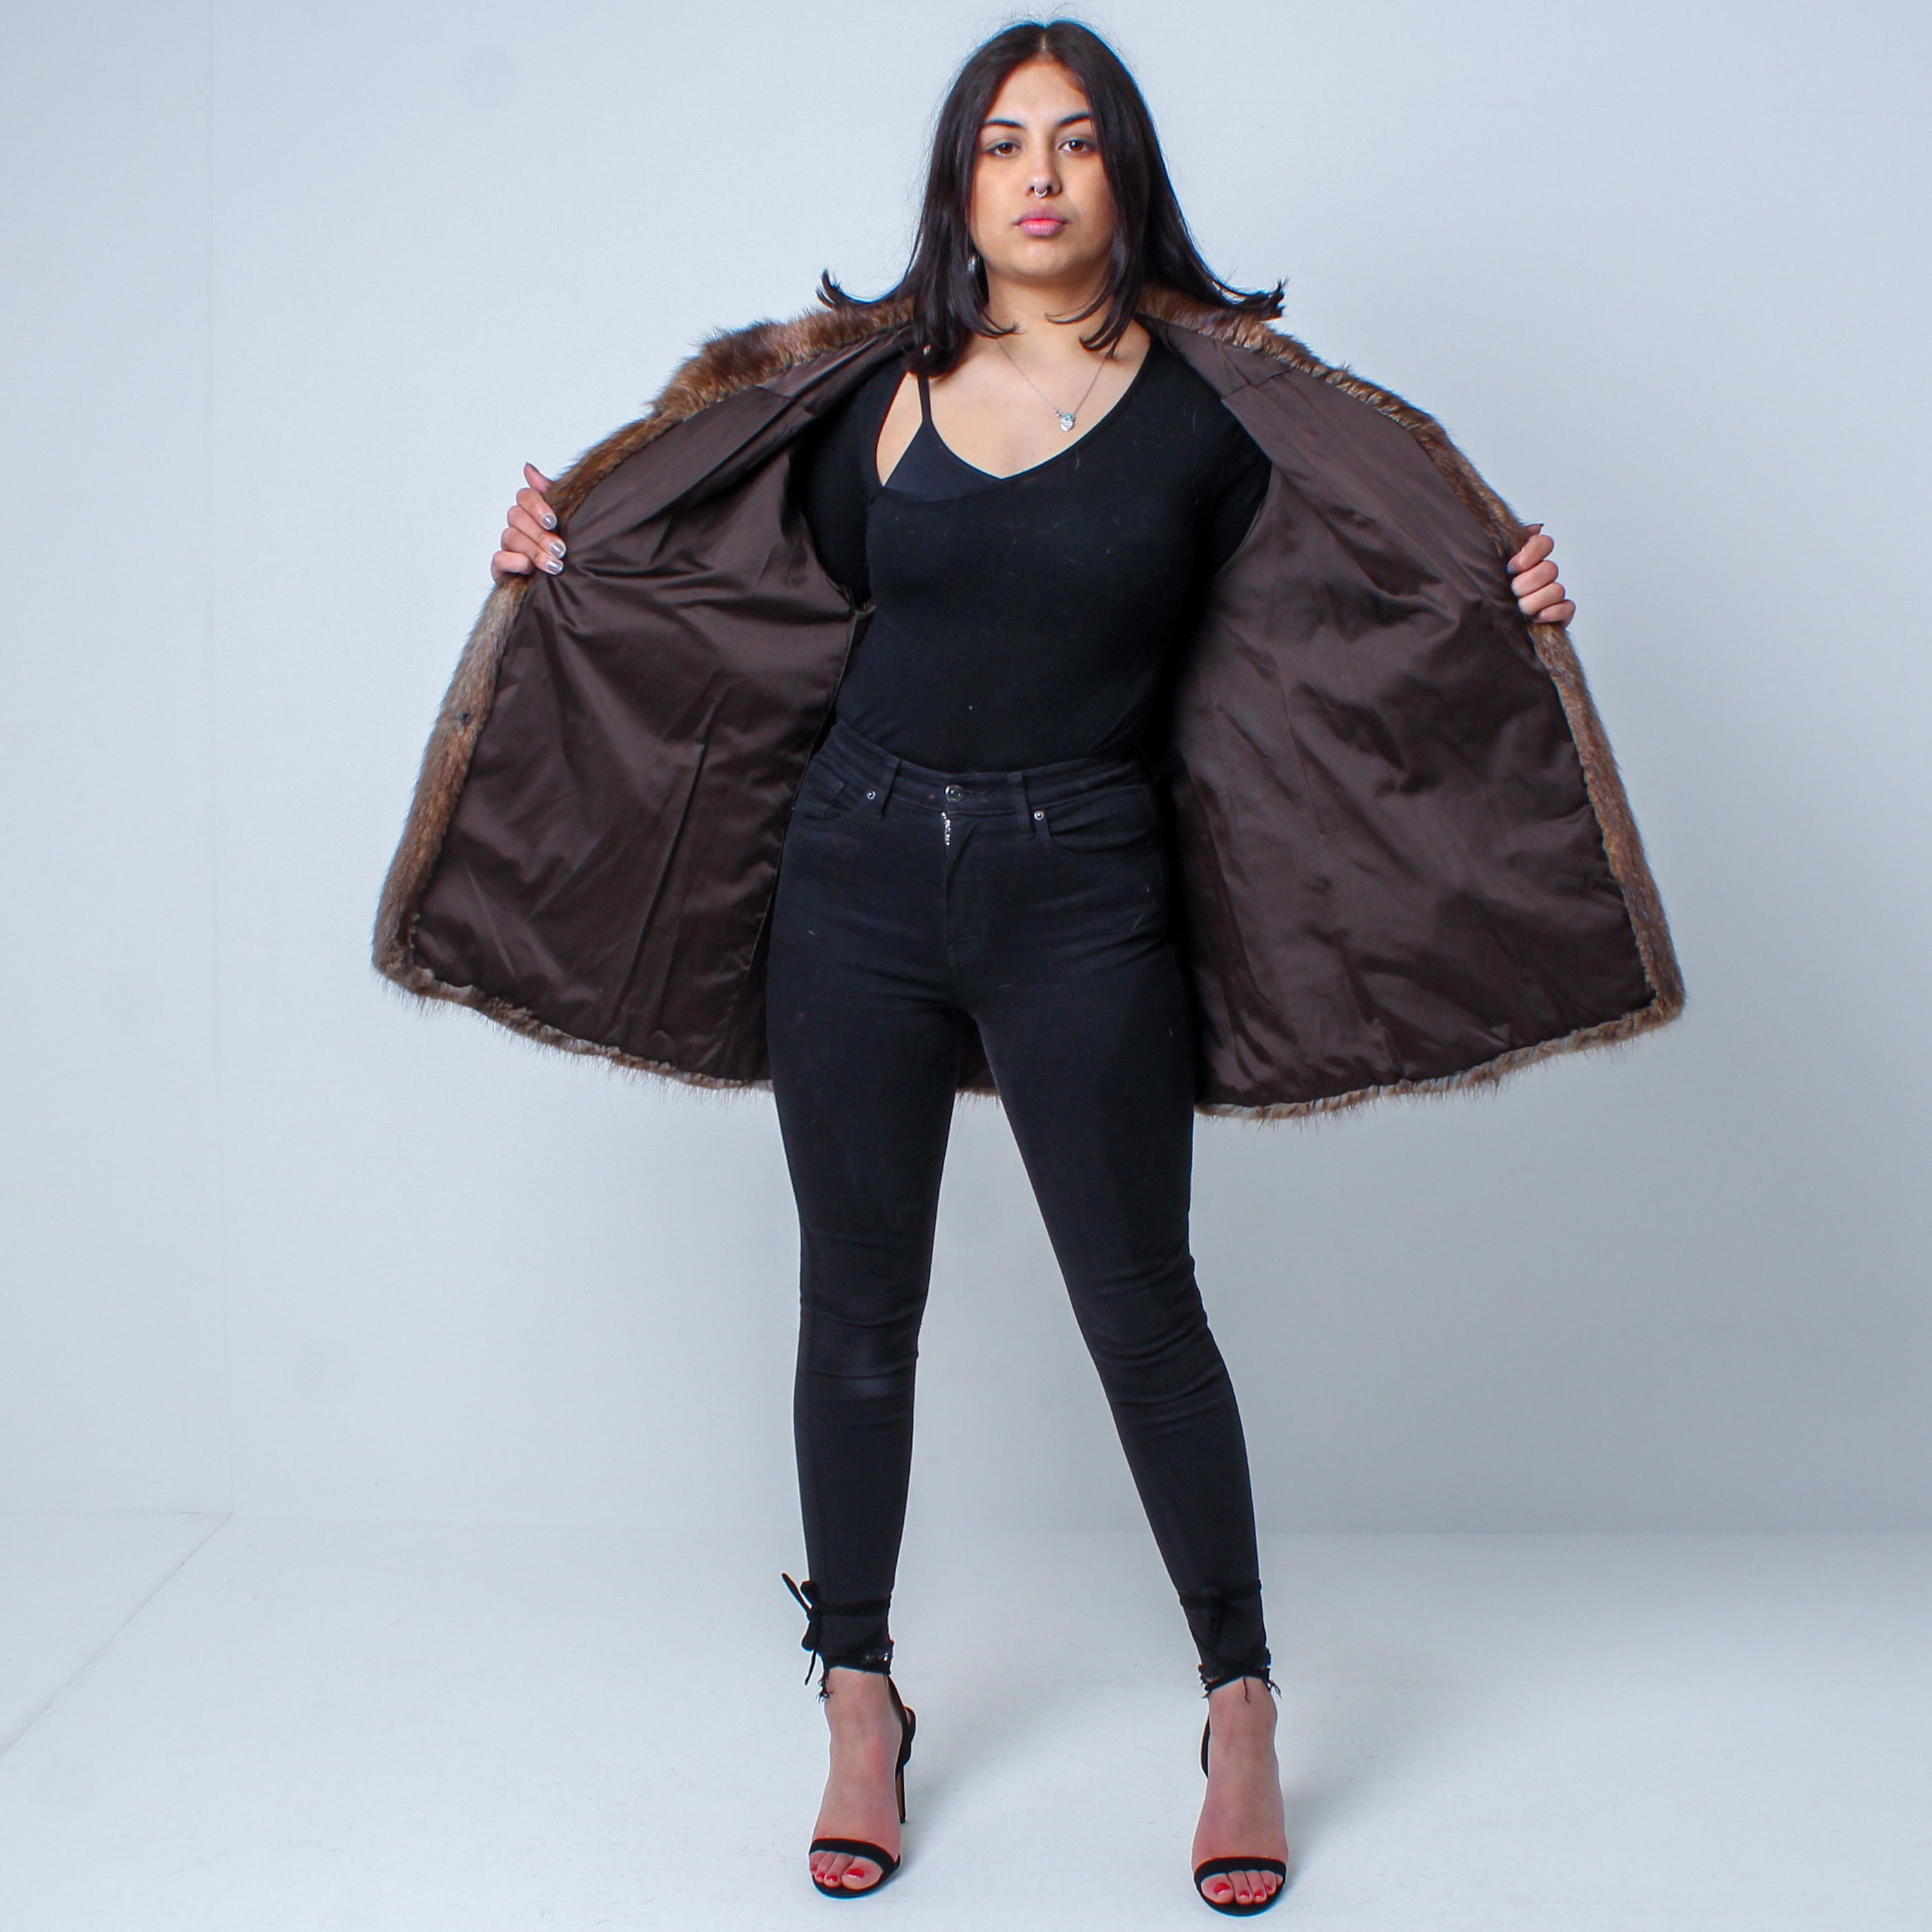 Women’s Luxury Vintage Real Mink Fur Coat Size: Medium - Large UK 12-16